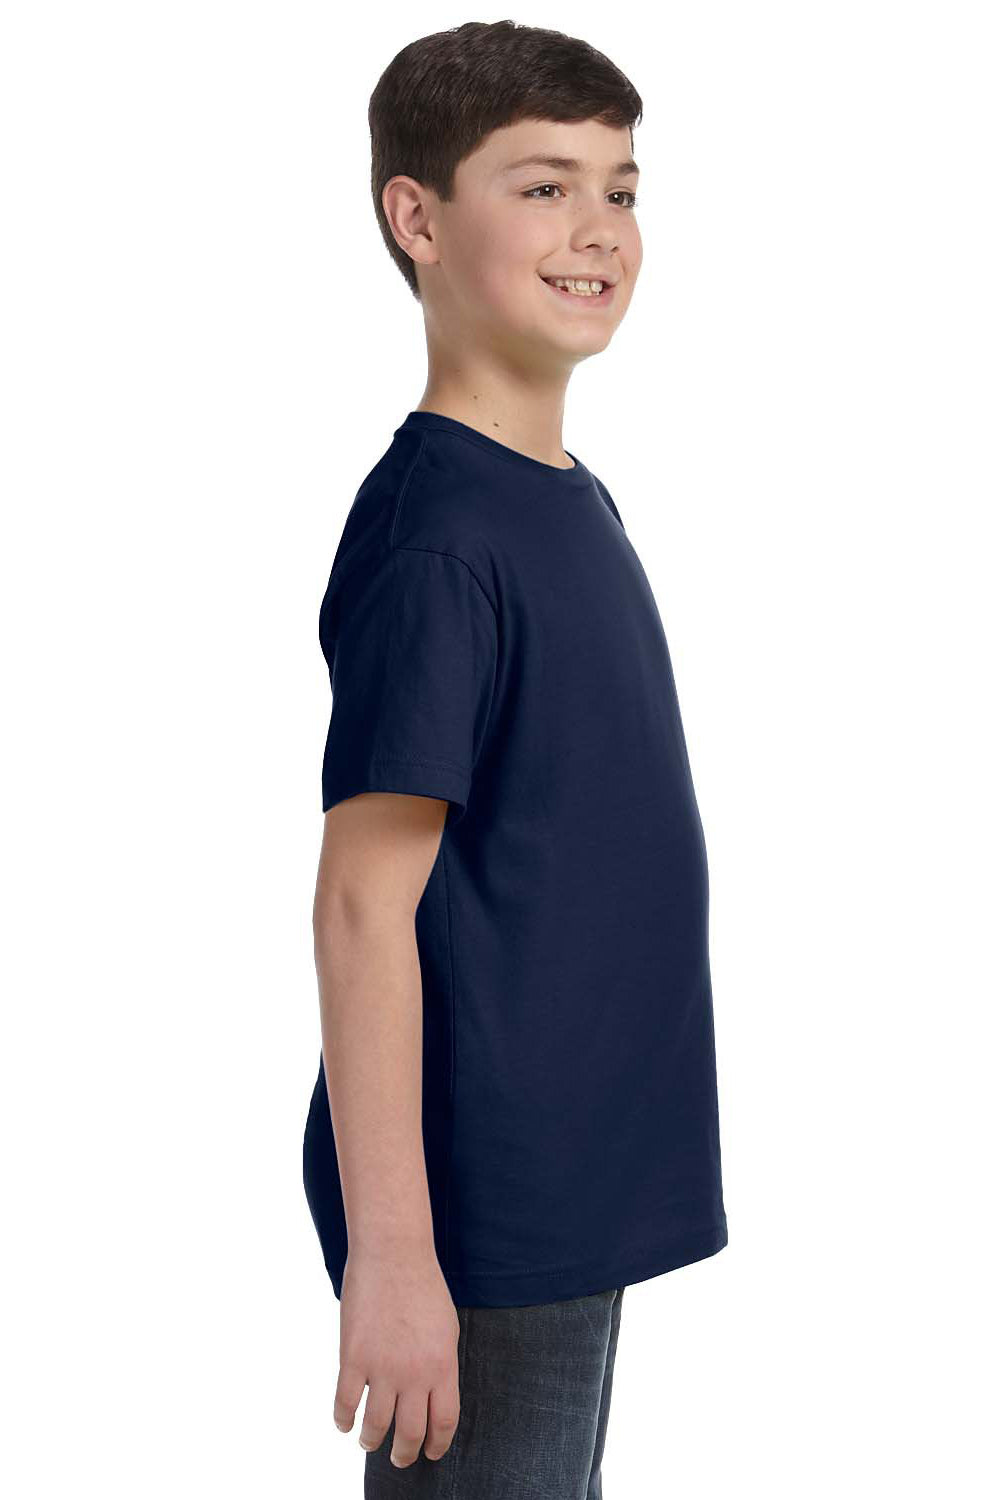 LAT 6101 Youth Fine Jersey Short Sleeve Crewneck T-Shirt Navy Blue Side